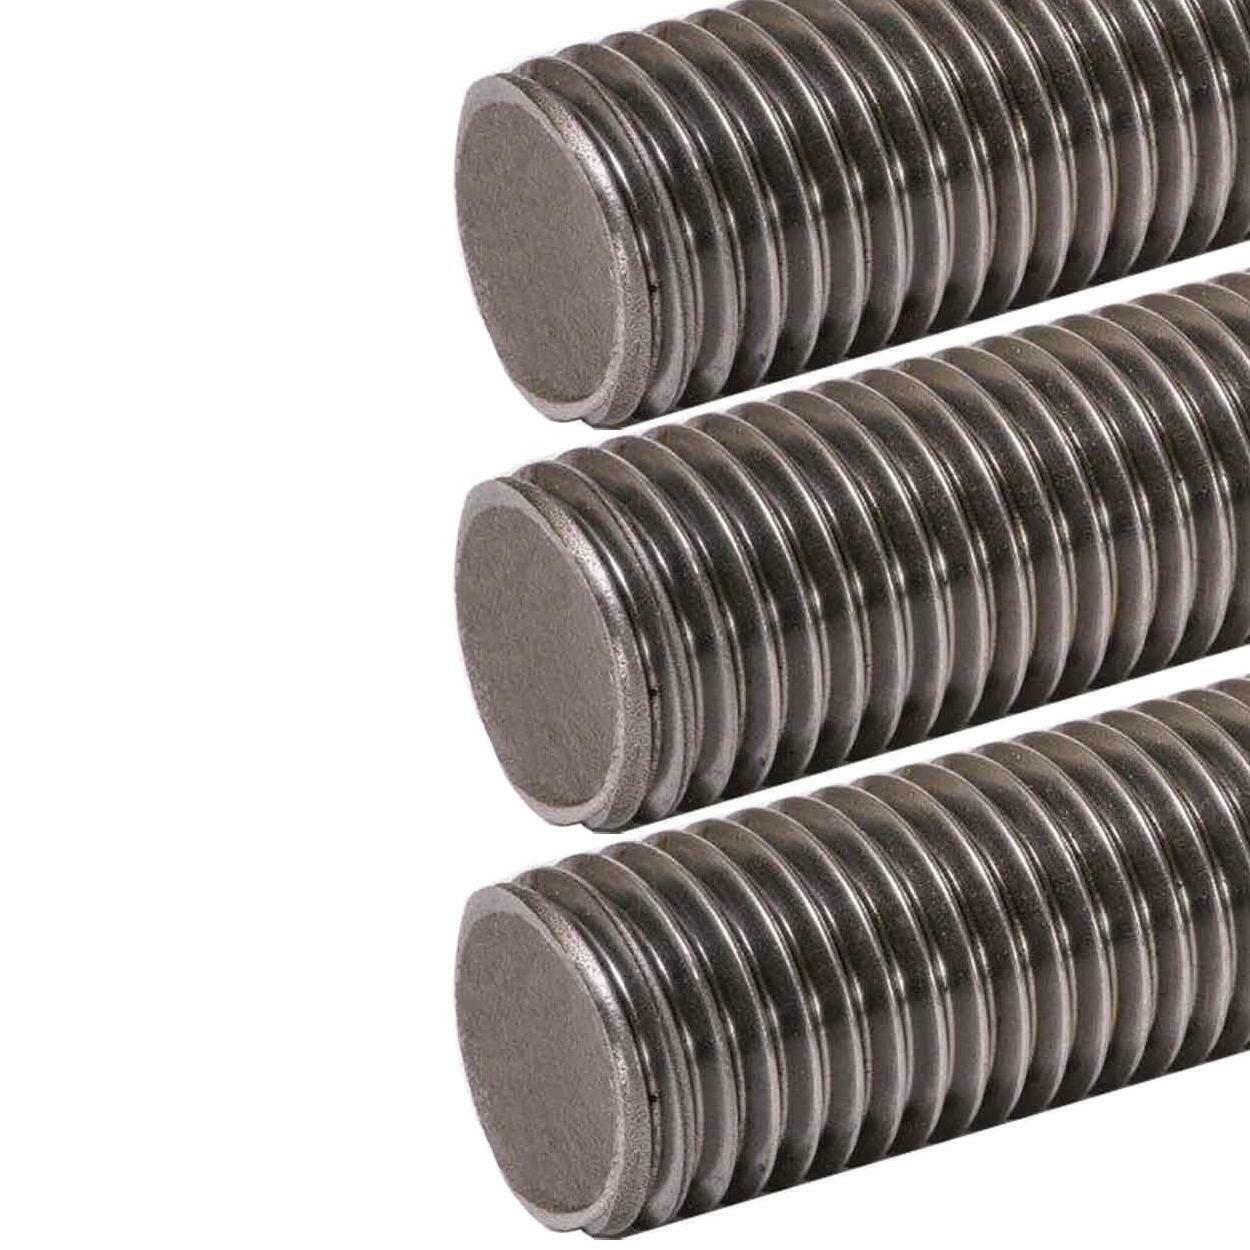 B7 Alloy Steel Threaded Rod, Size: M20 X 2.5, Metric Plain, Length: 36 Inches...